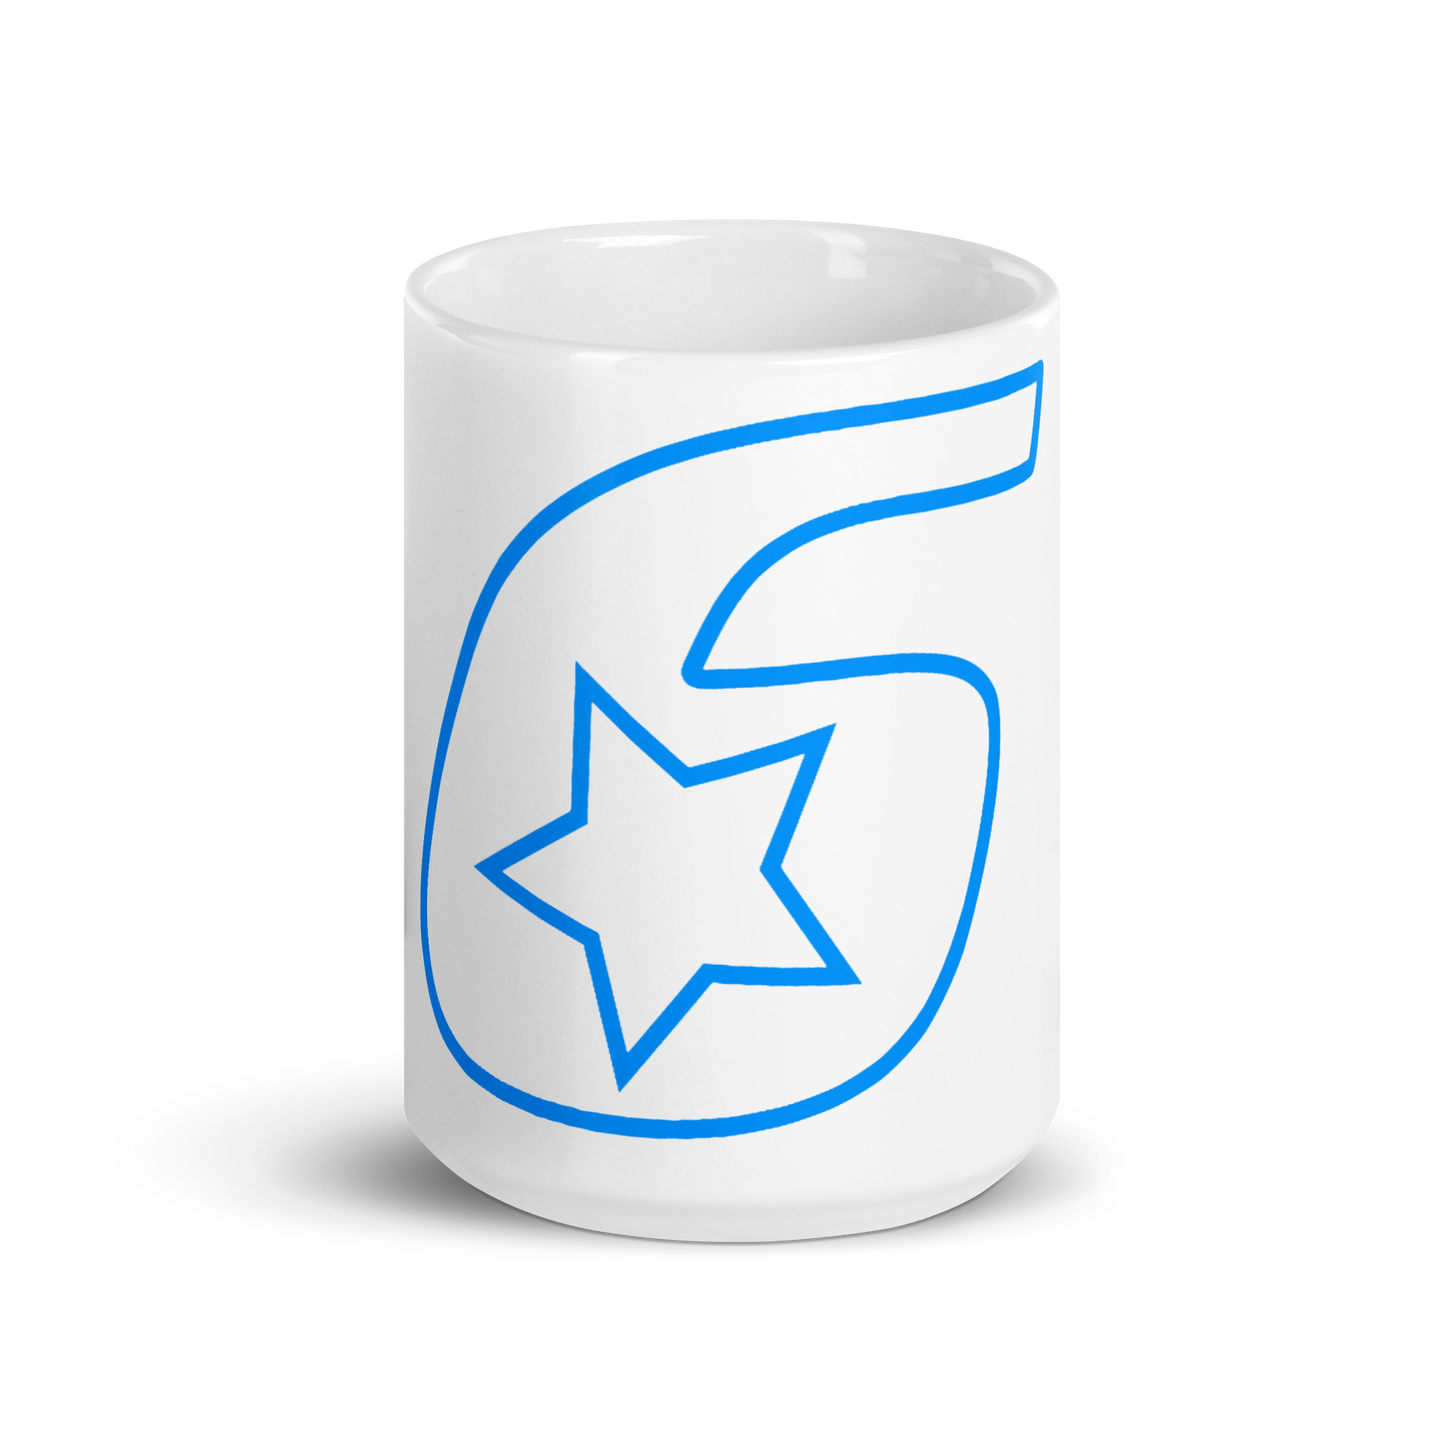 Six Star Motorsports "6" Logo Mug